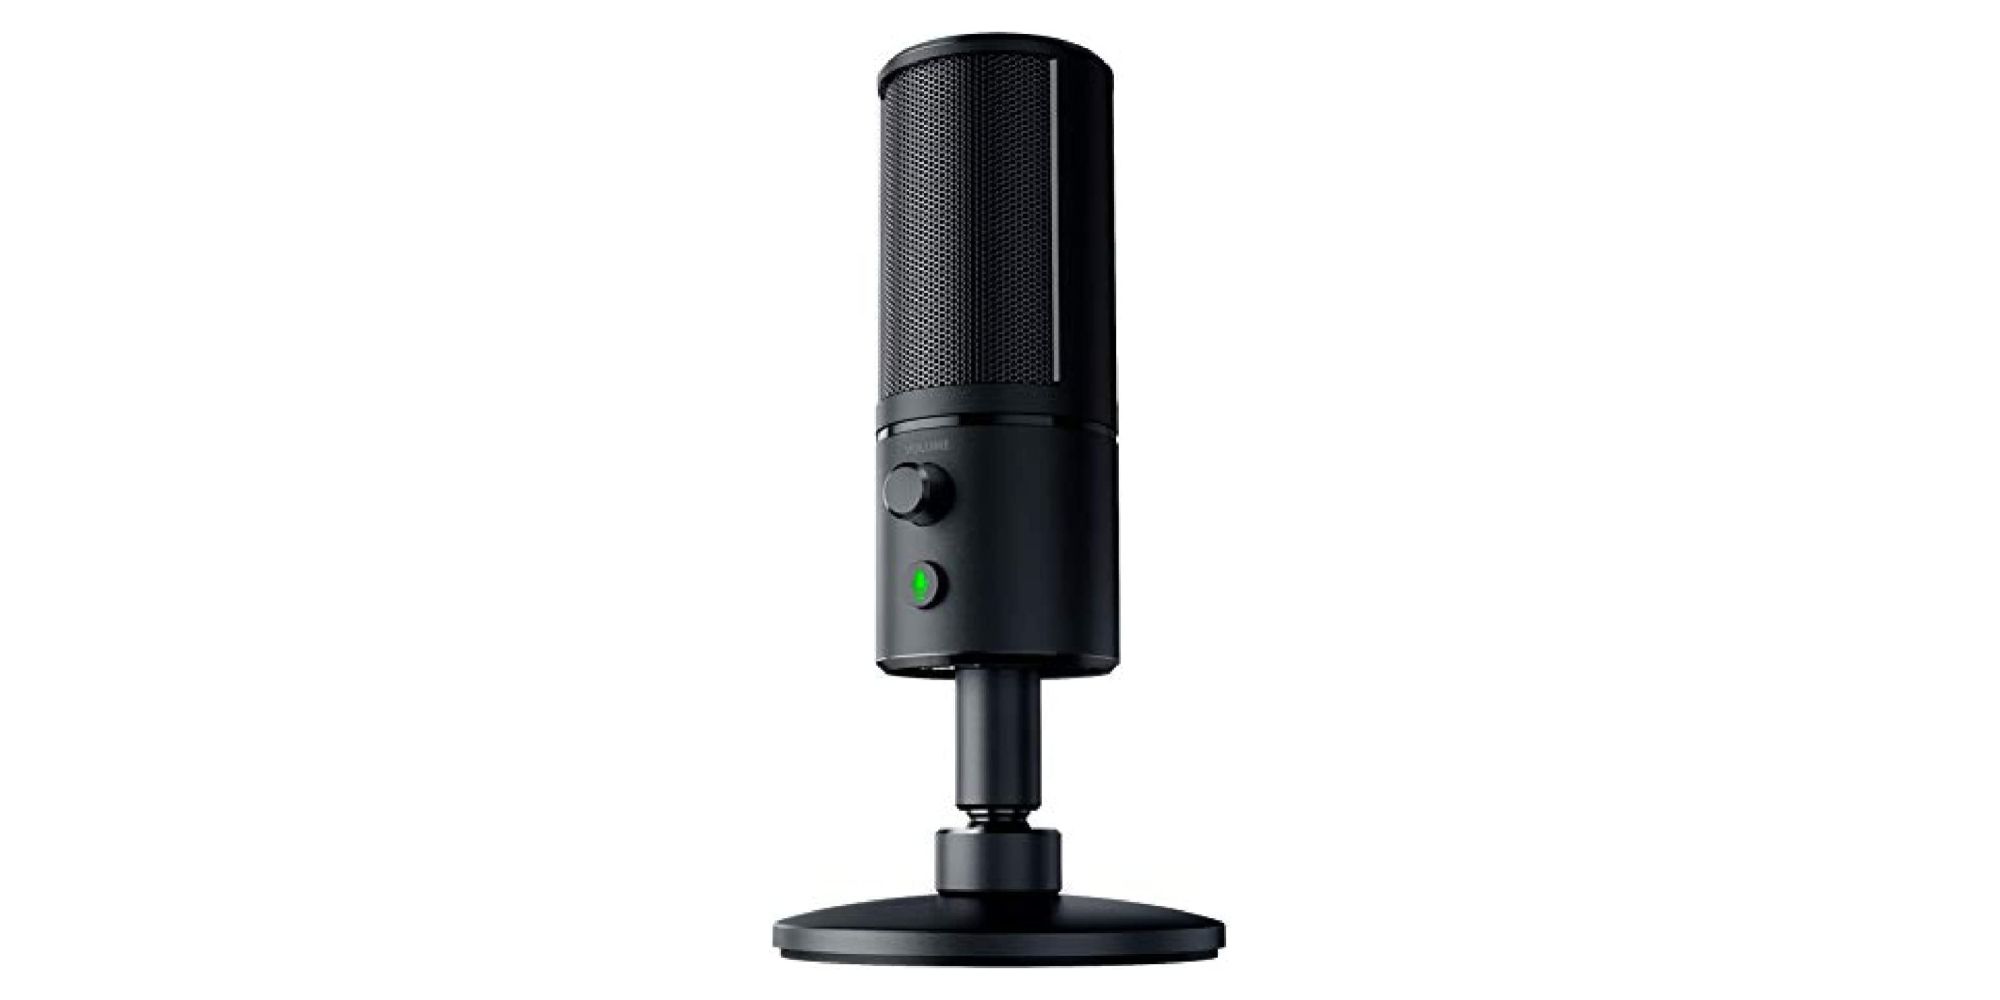 Razer-microfoon van Amazon